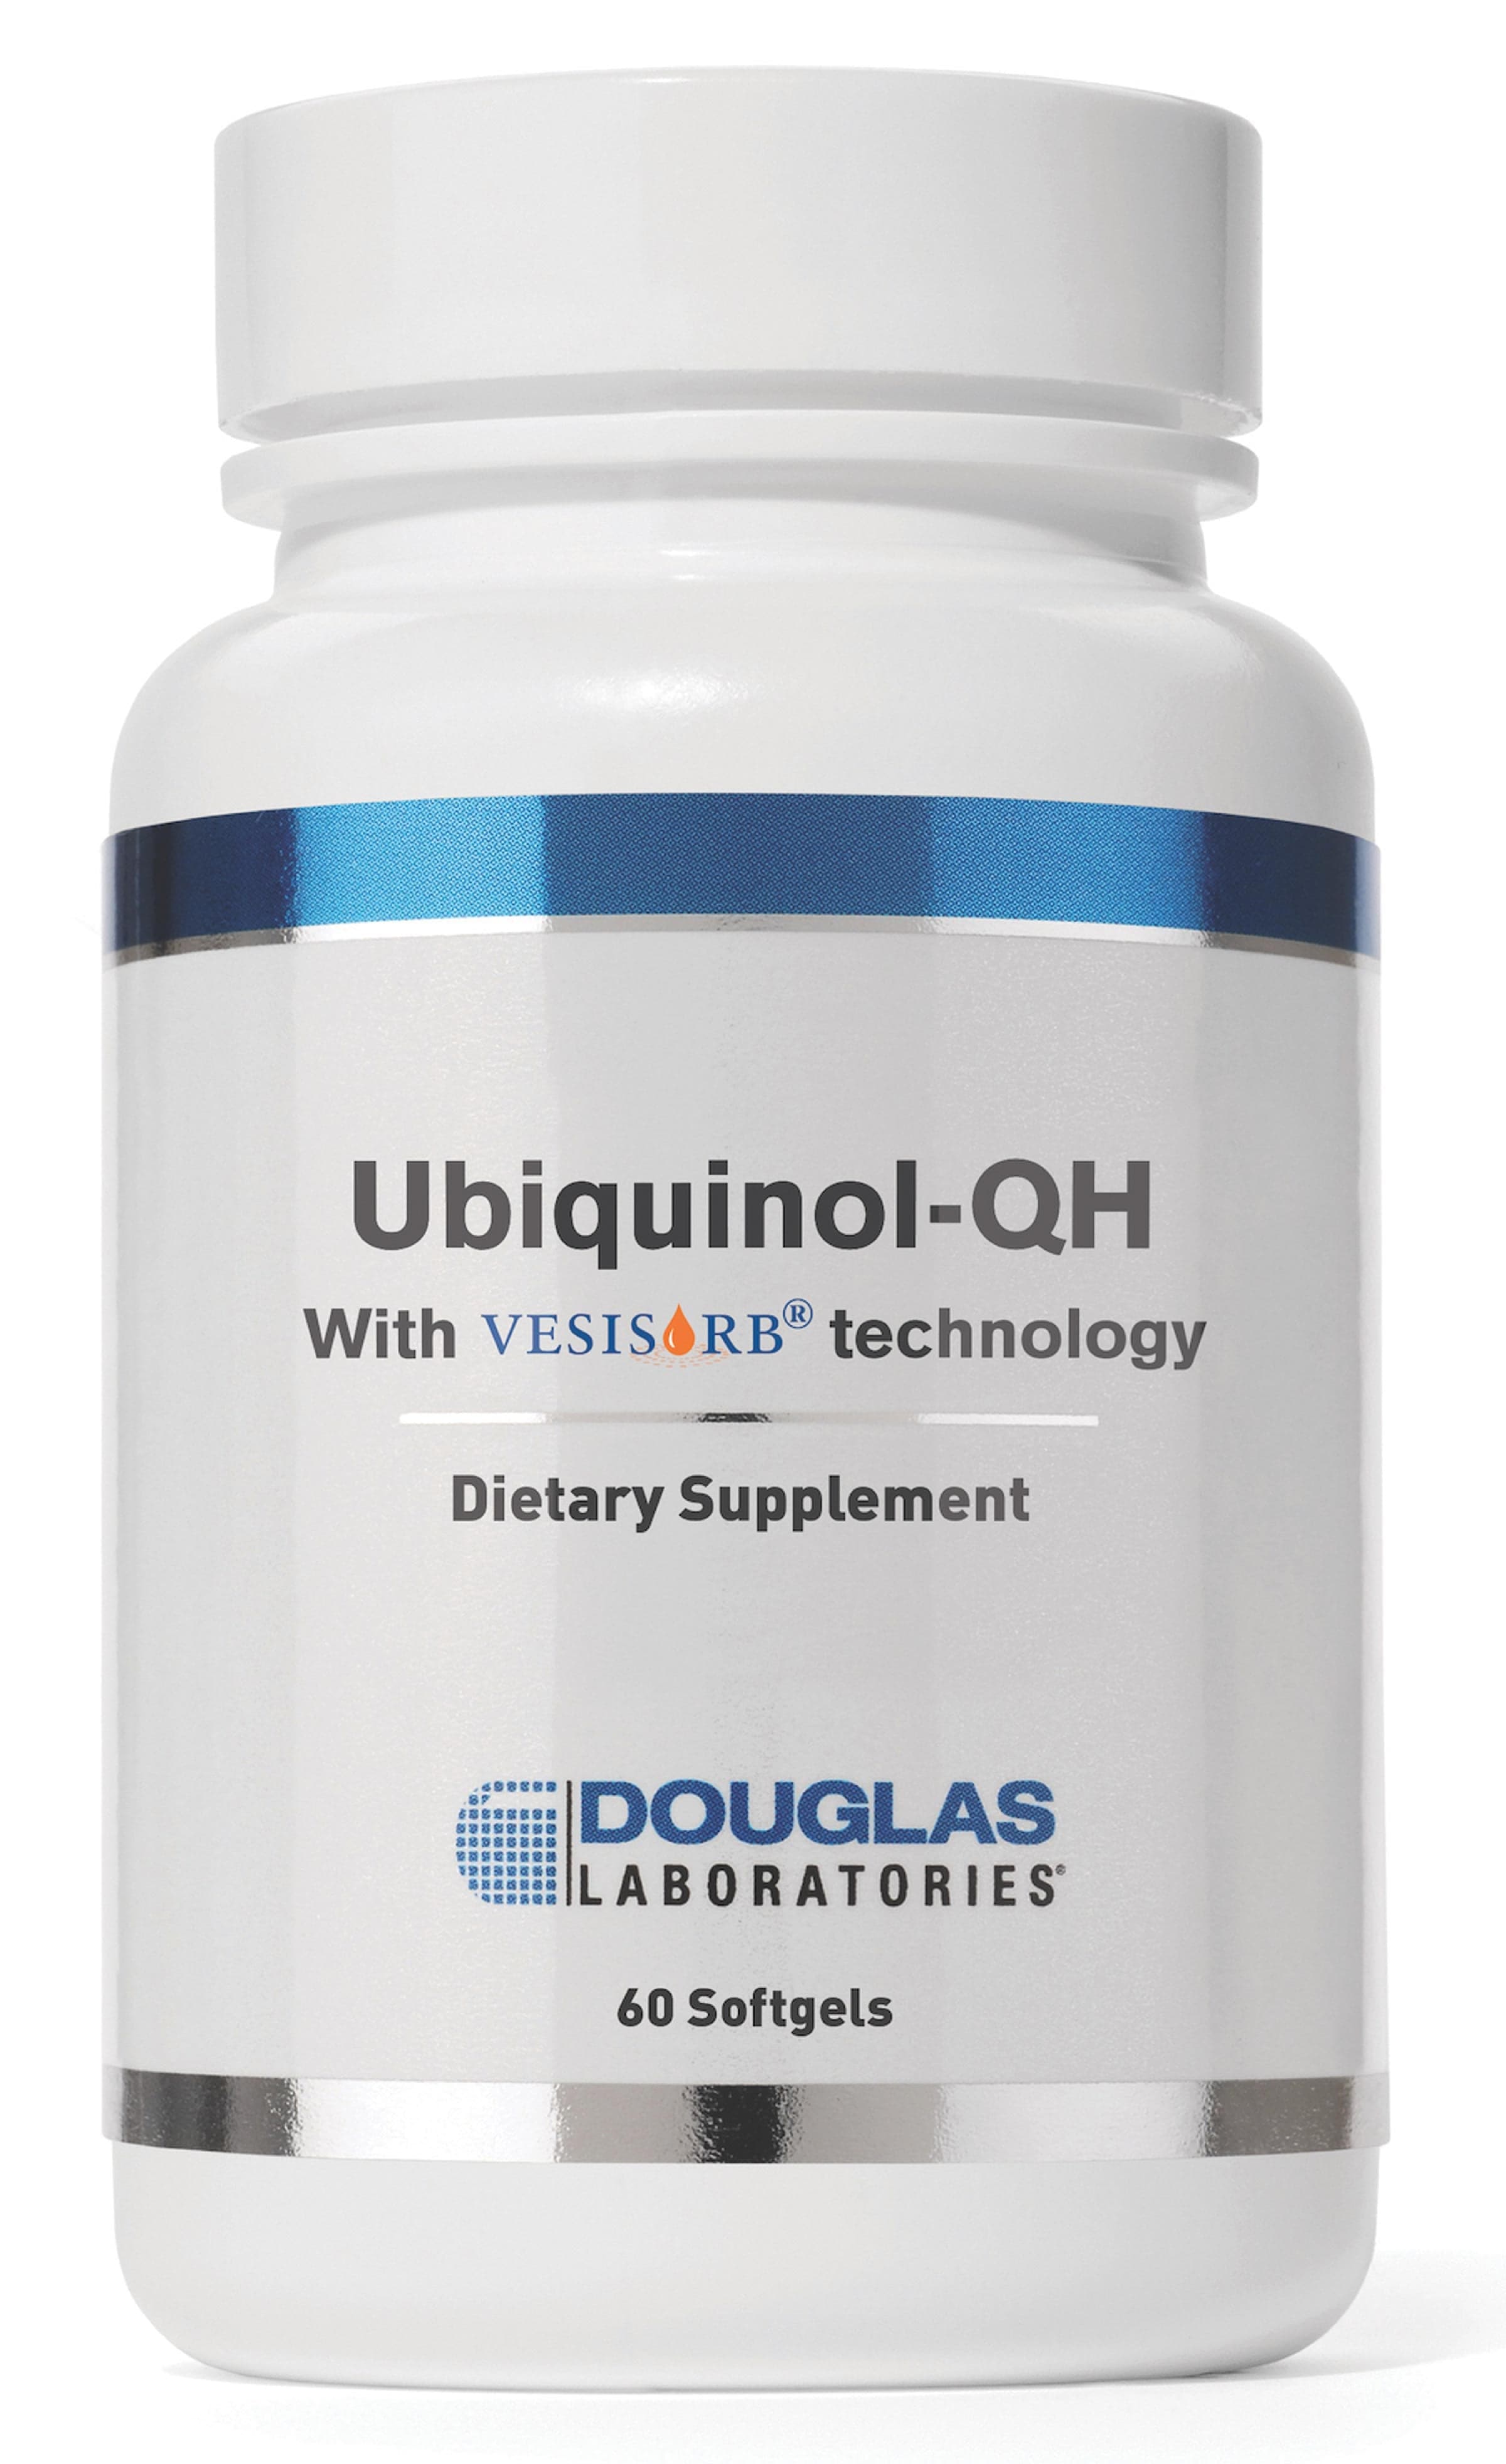 Douglas Laboratories Ubiquinol-QH with VESIsorb